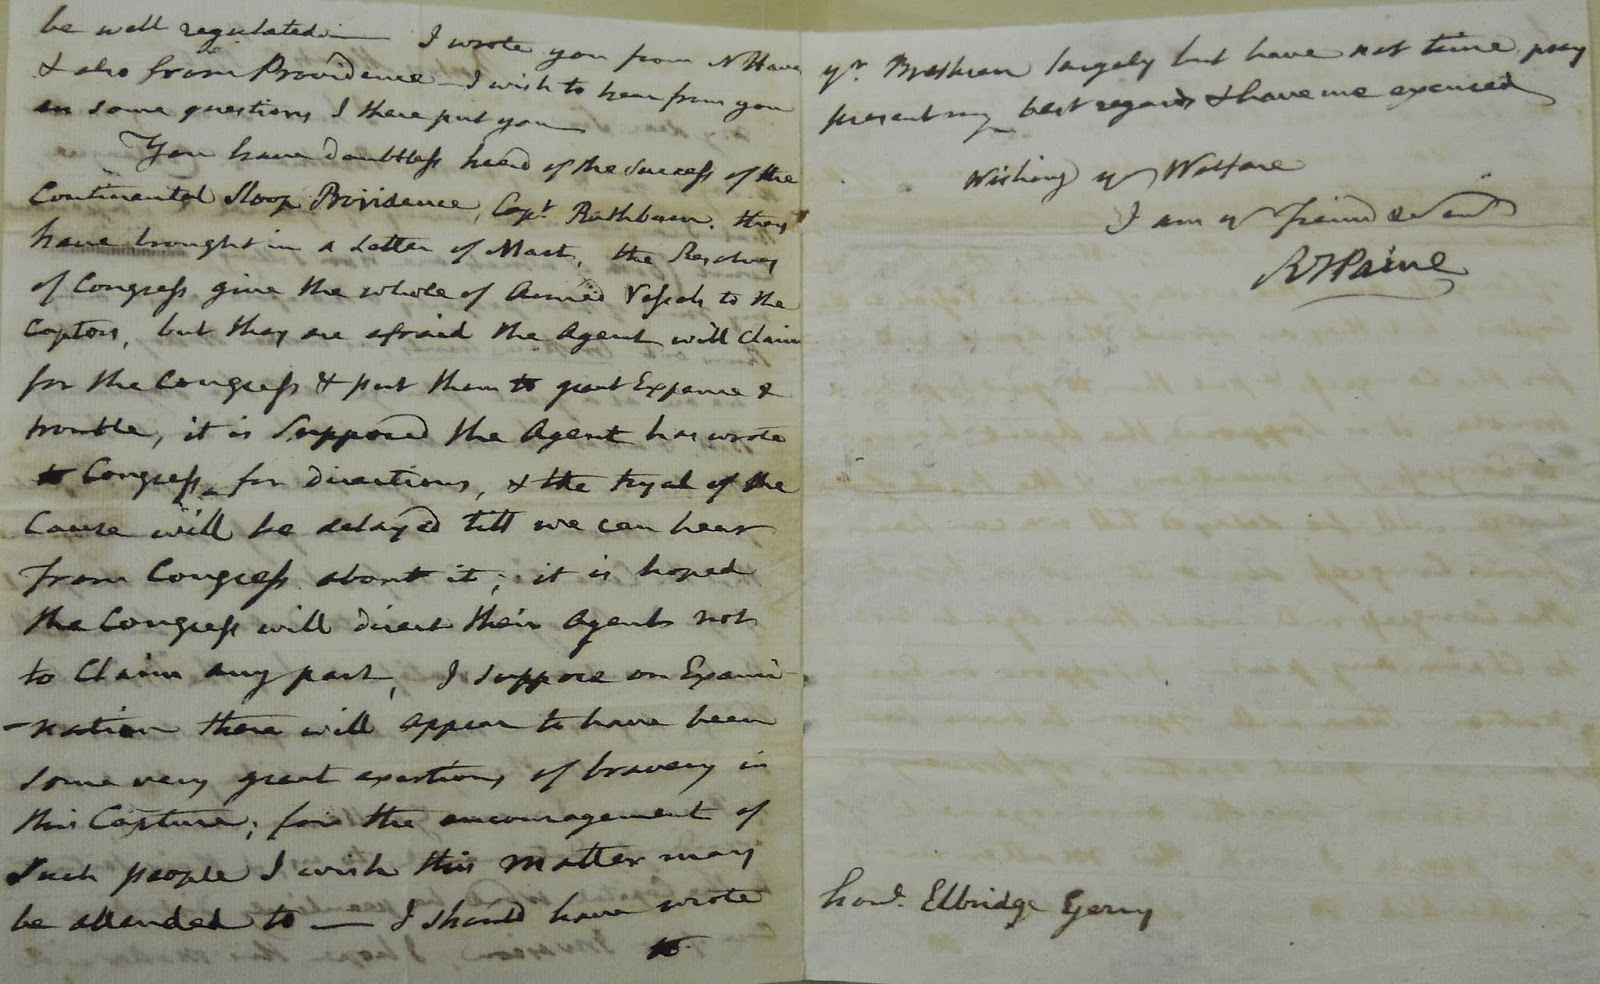 document from Revolutionary War era